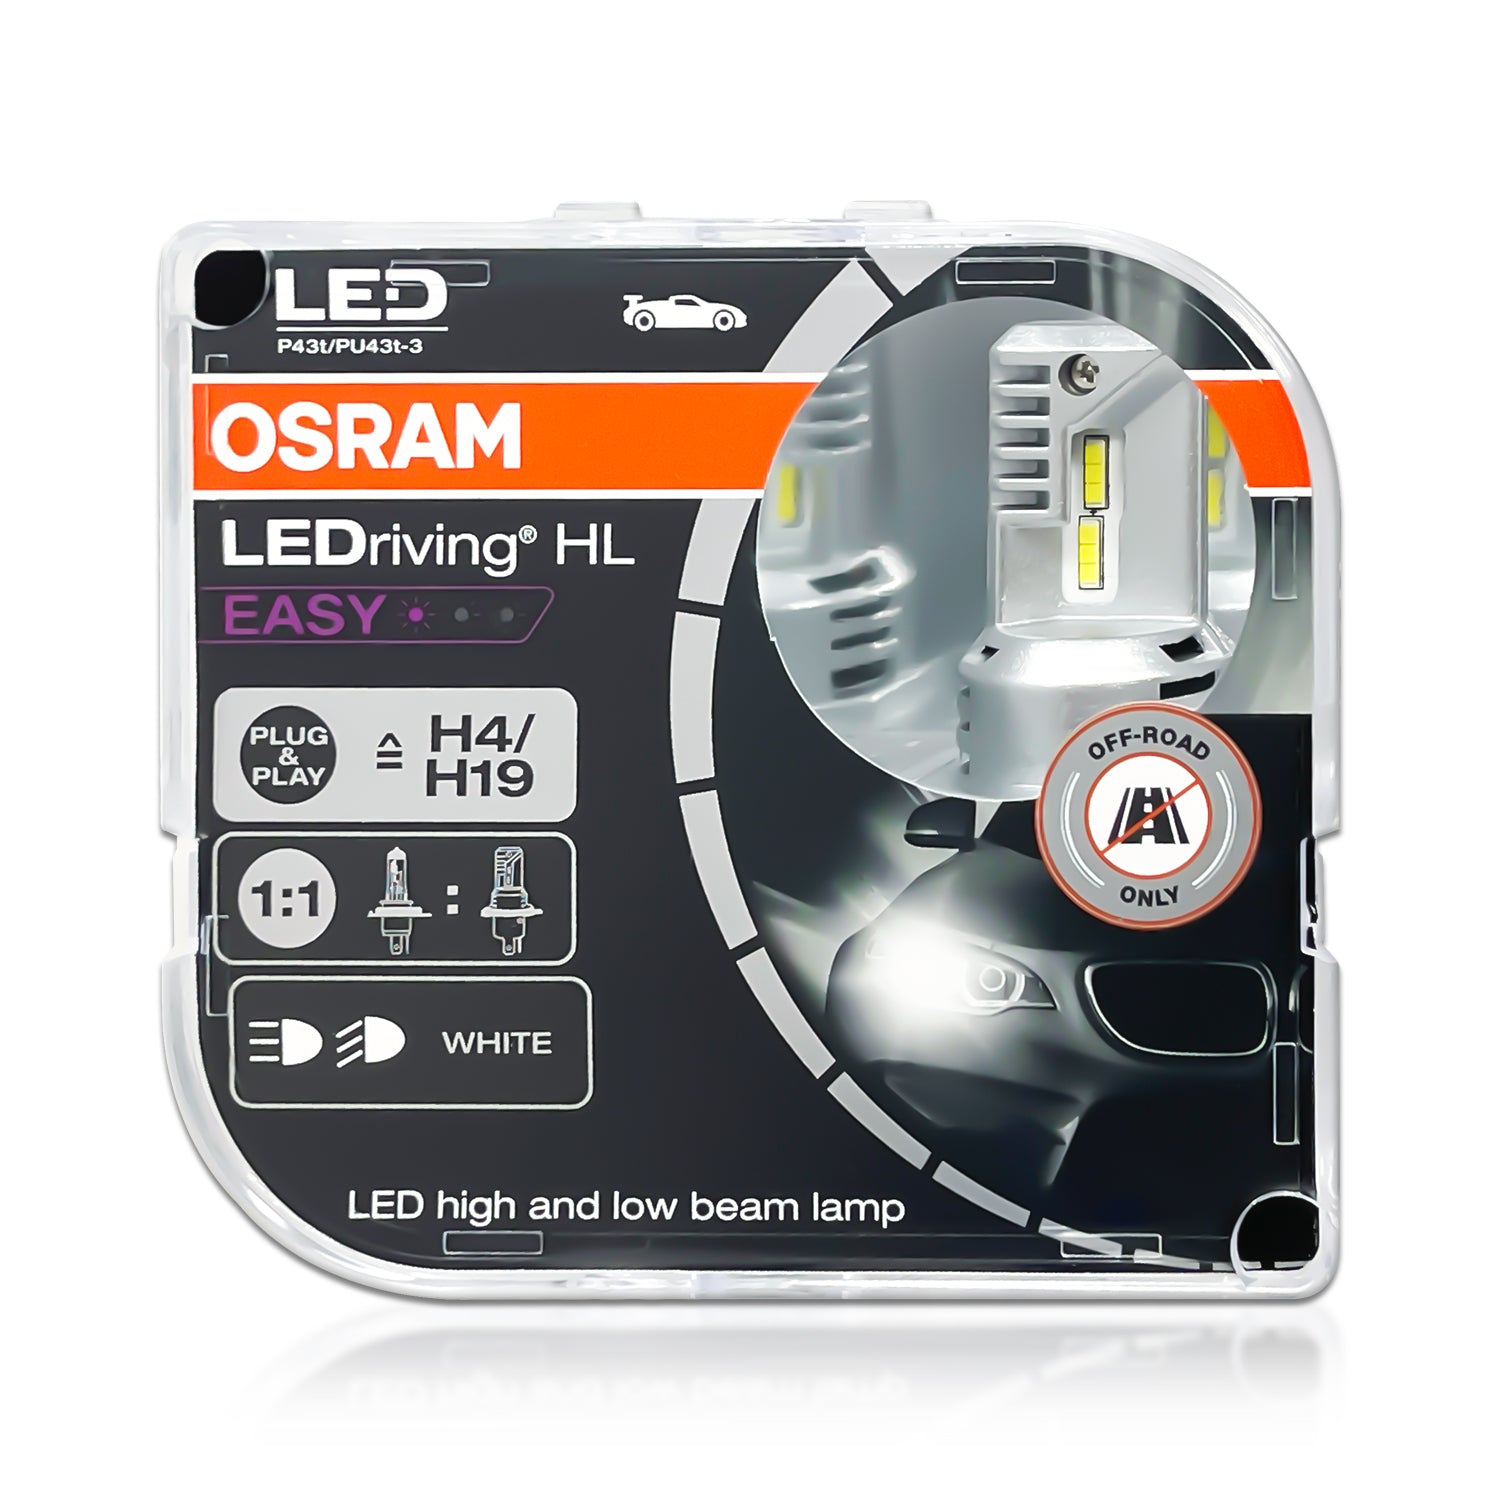 OSRAM LEDriving HL (Next Generation) LED H4, Twin Car Headlight Bulbs